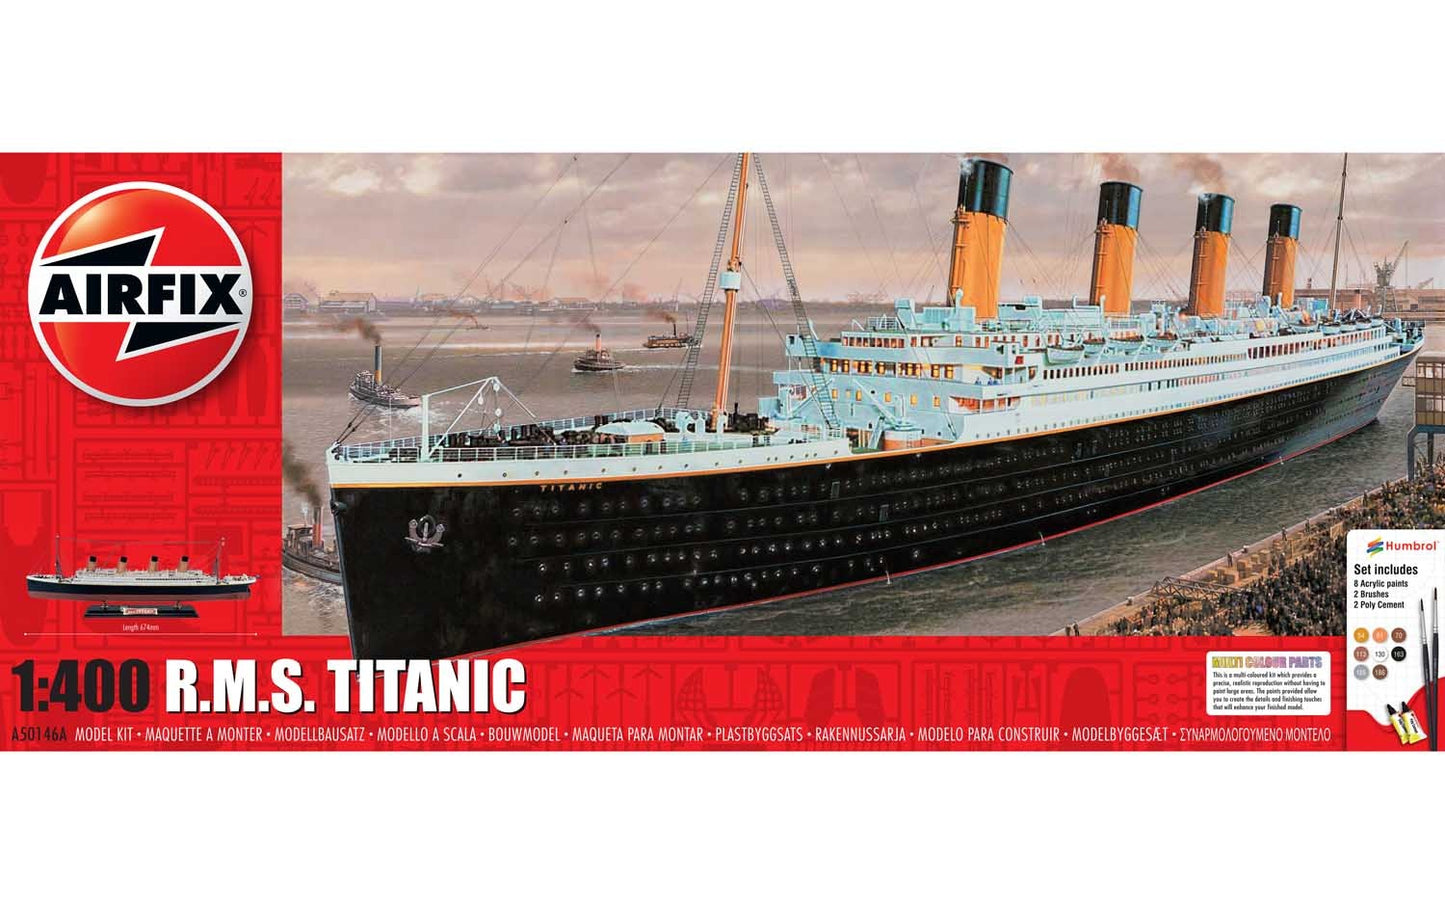 A50146A - R.M.S. Titanic Gift Set